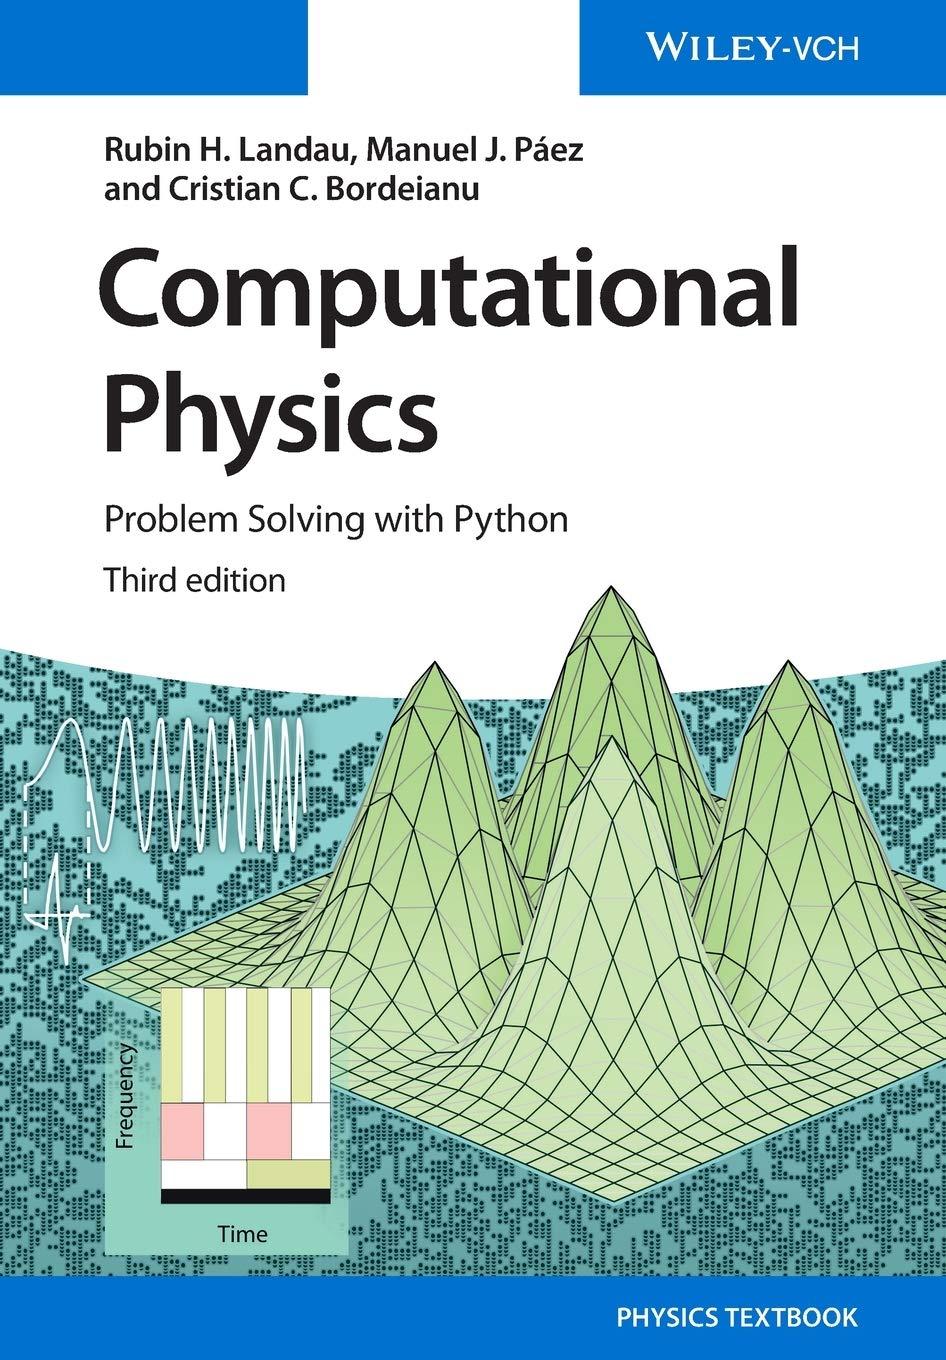 computational physics problem solving with python 3rd edition manuel j. páez, rubin h. landau, cristian c.